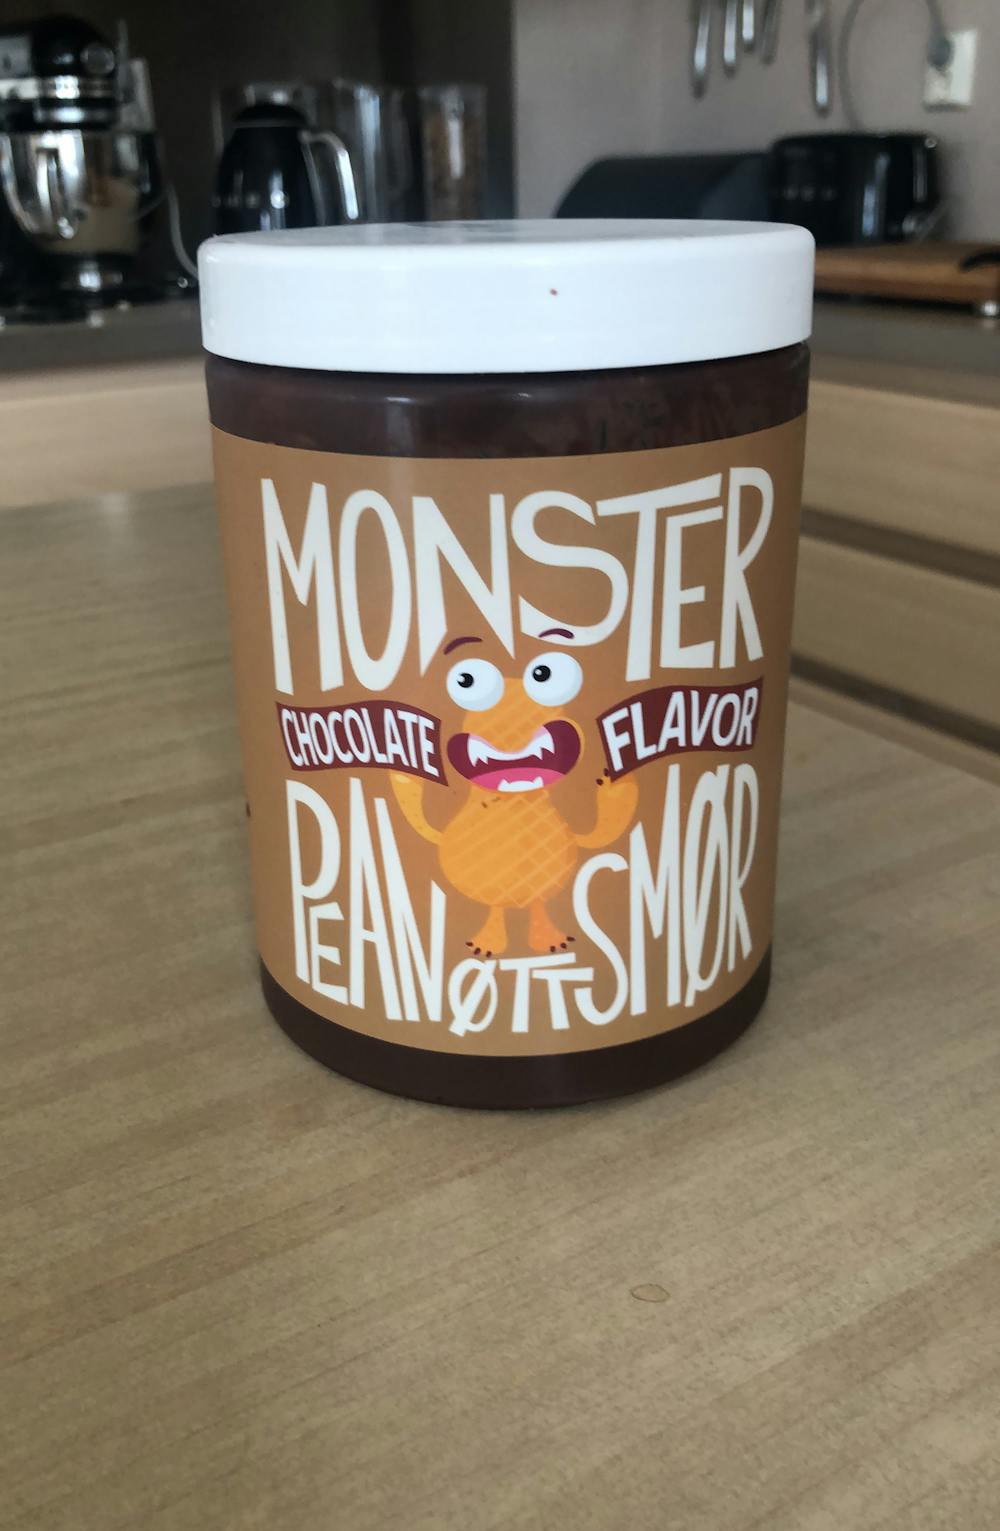 Peanøttsmør chocolate flavor, Monster